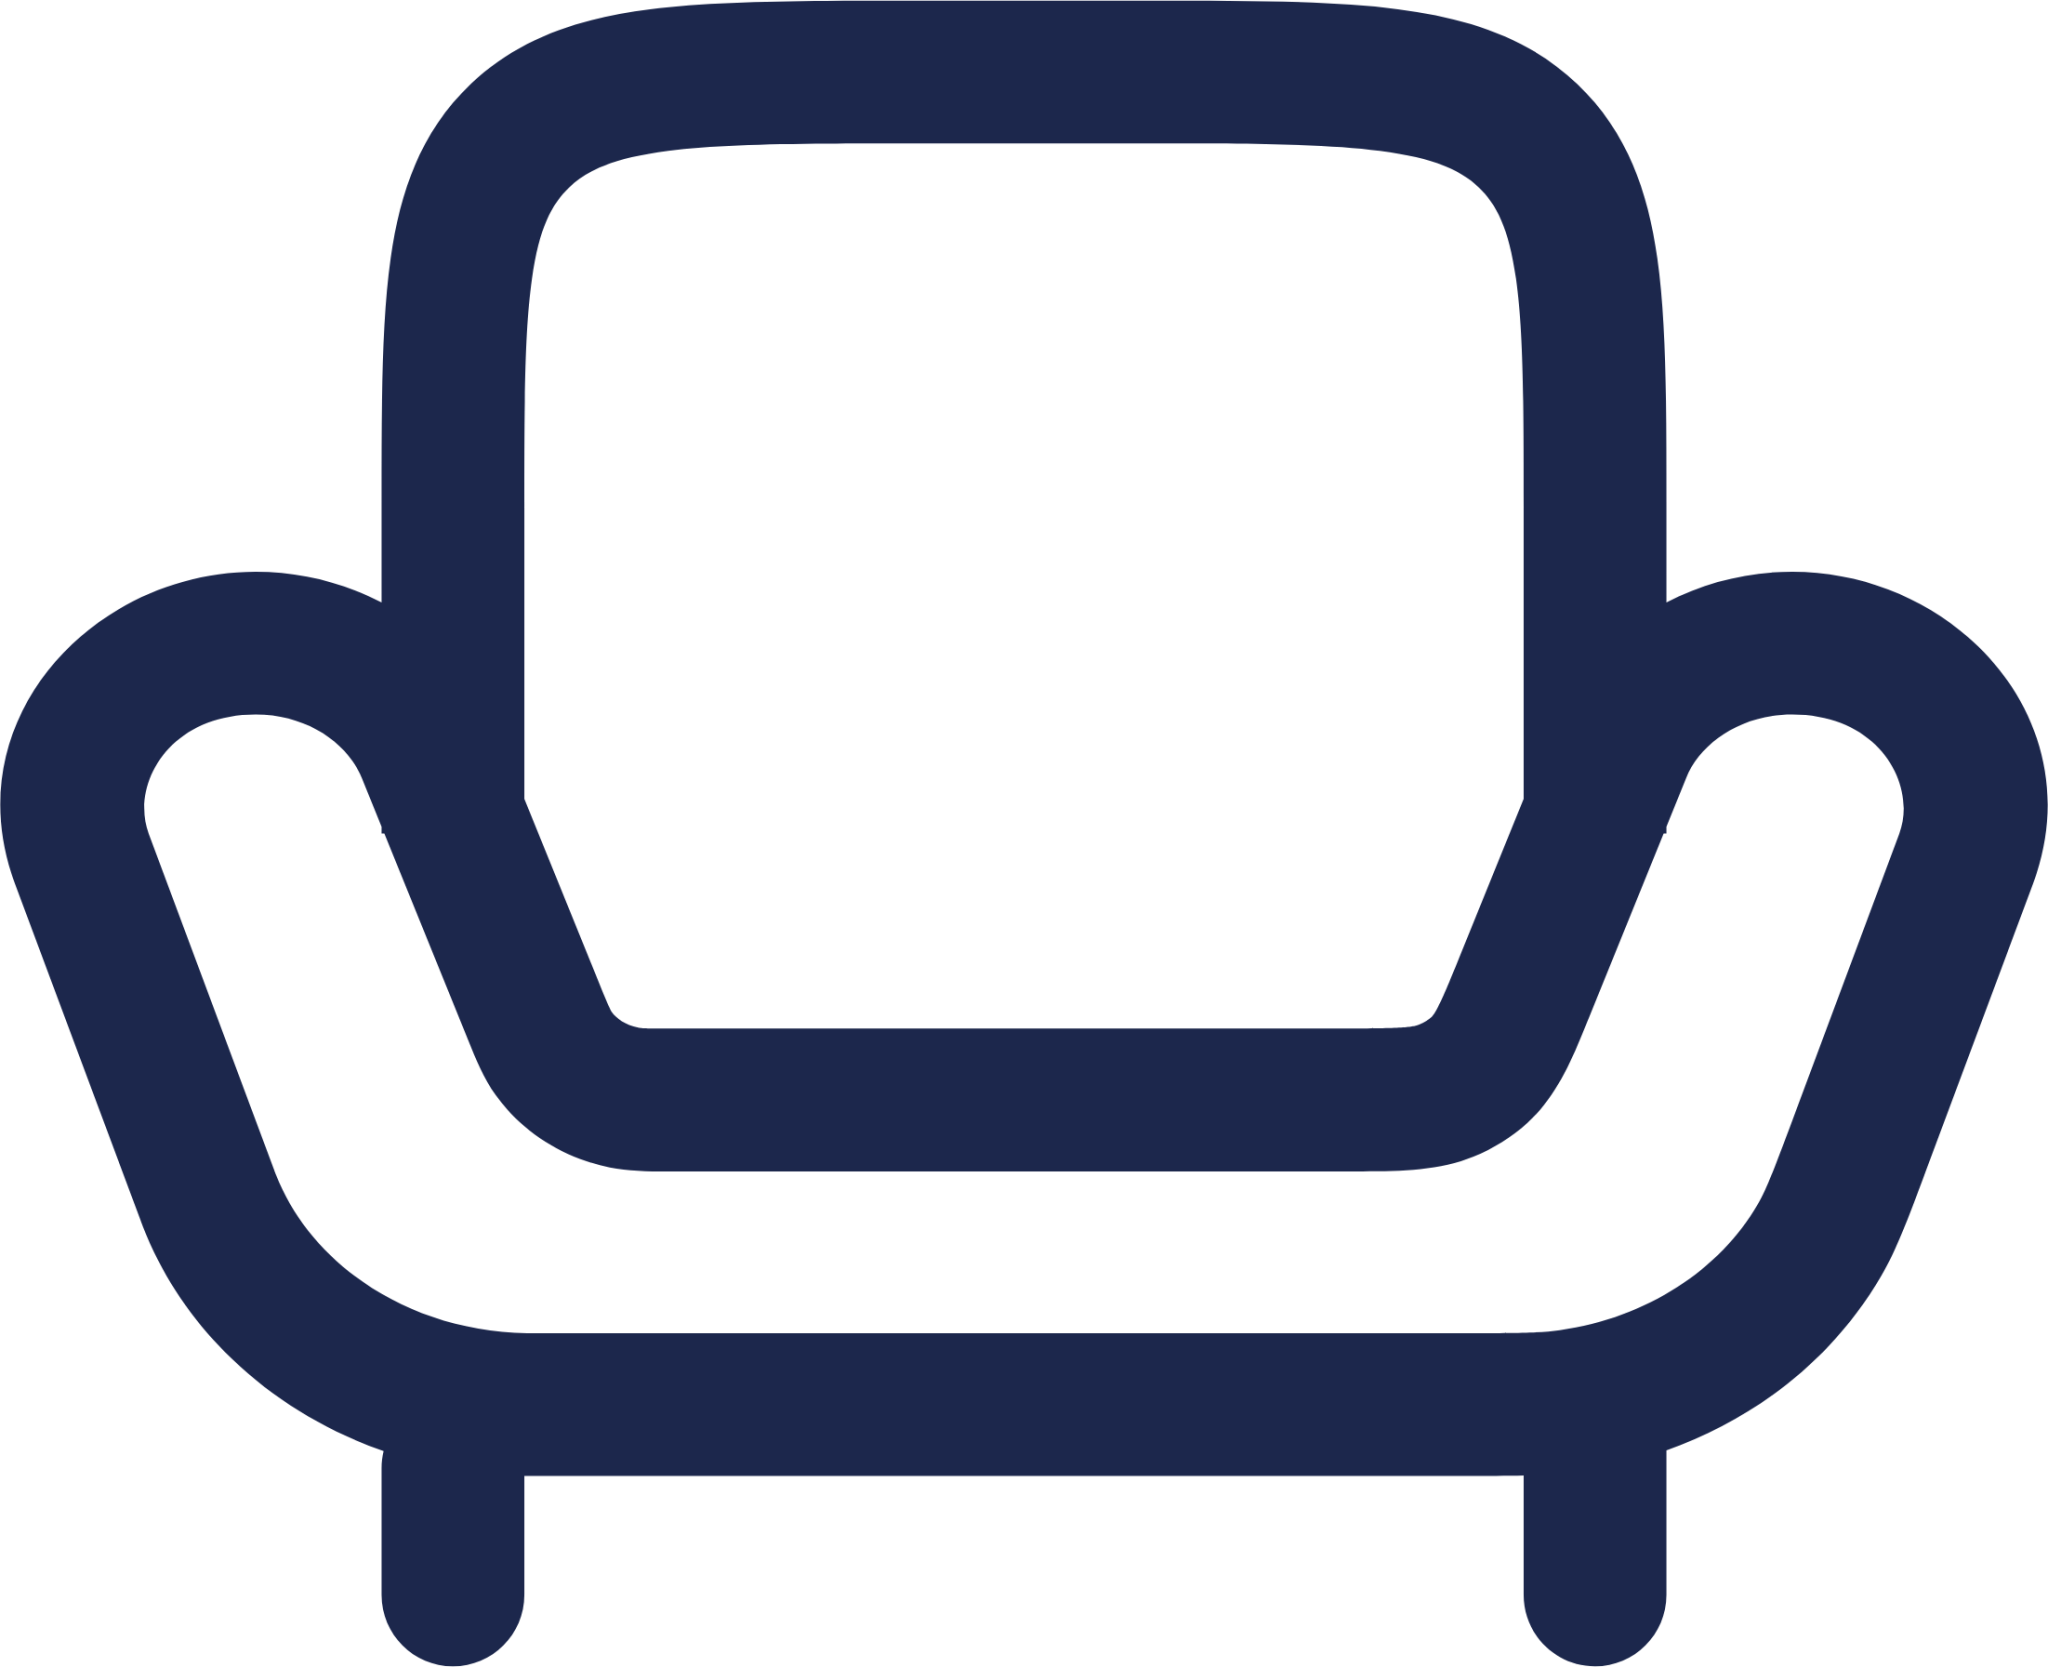 Armchair 2 icon